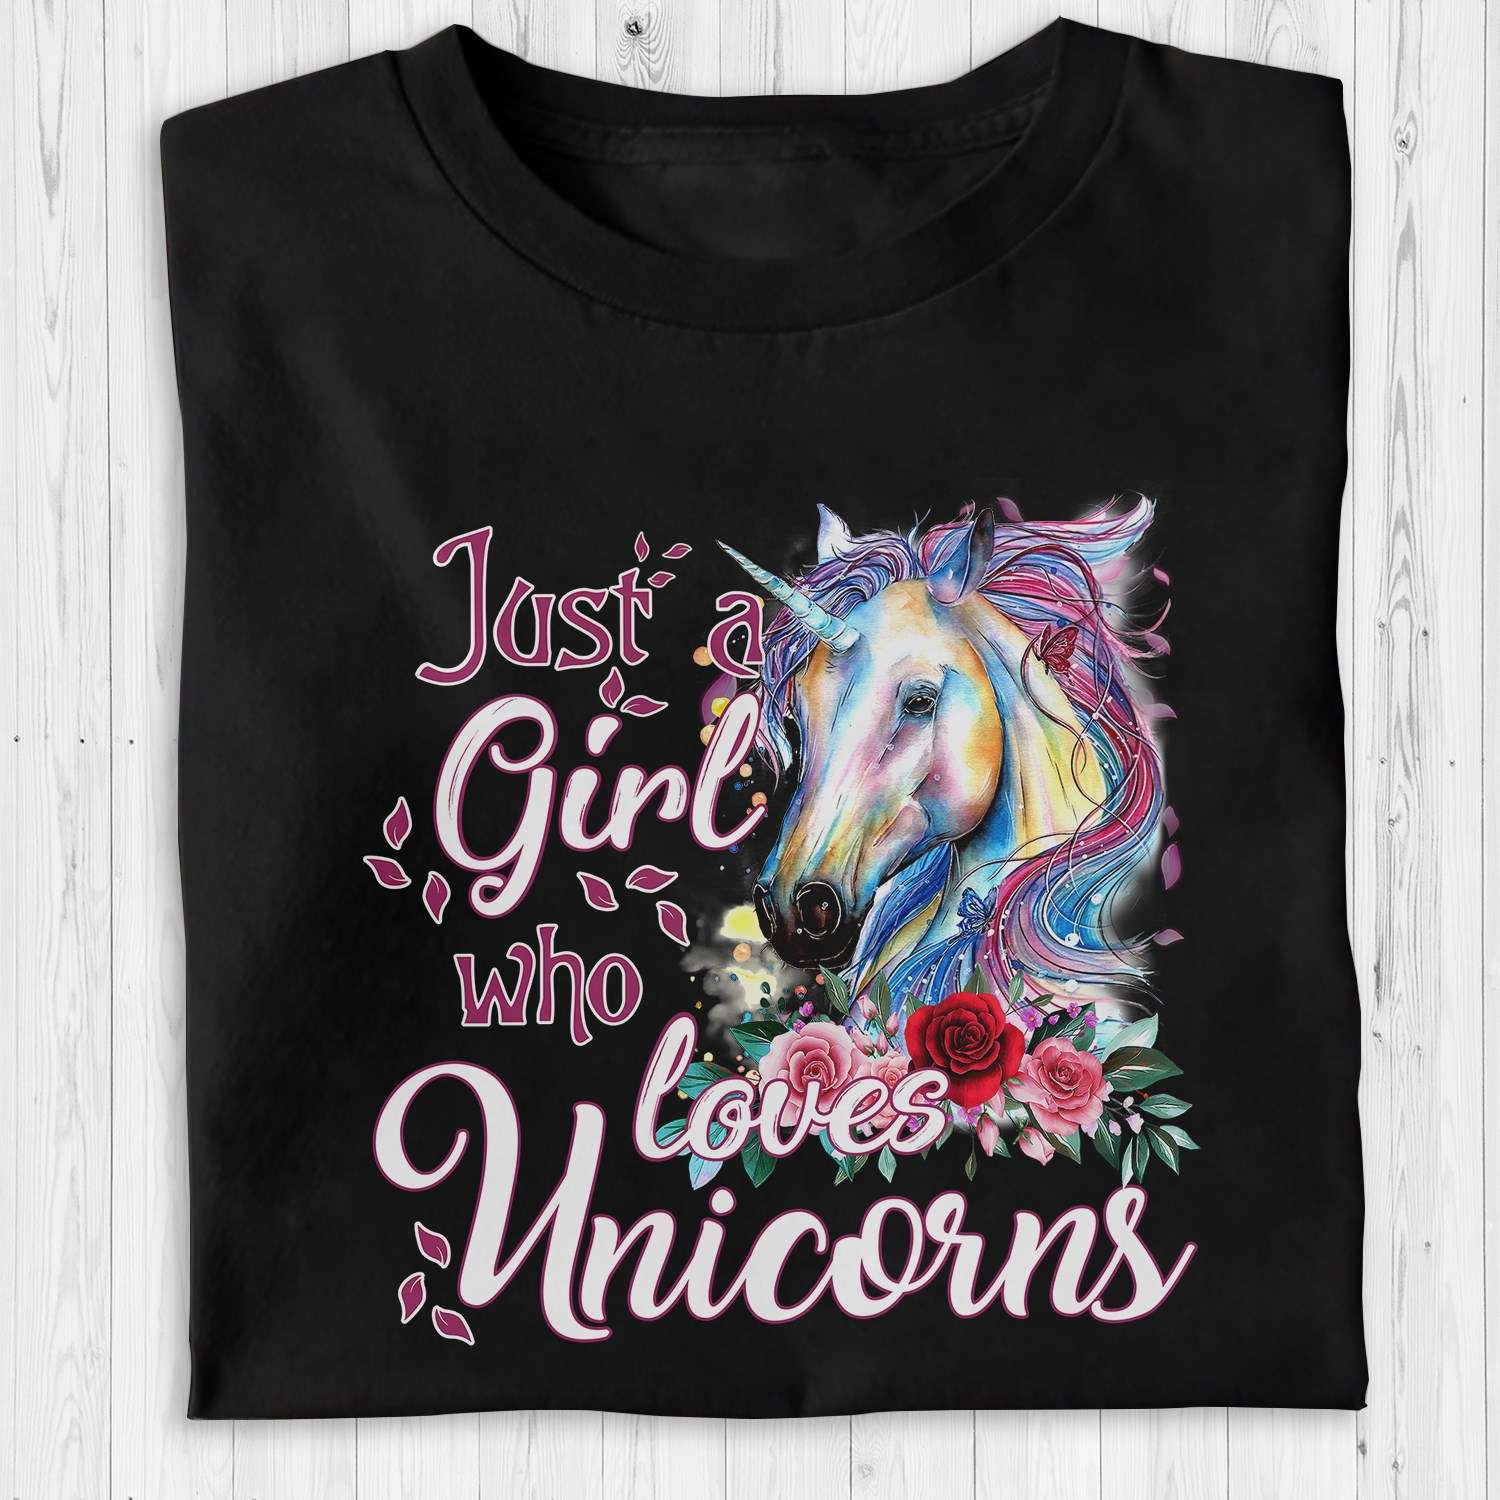 Just a girl who loves unicorns - Unicorn lover, unicorn girl